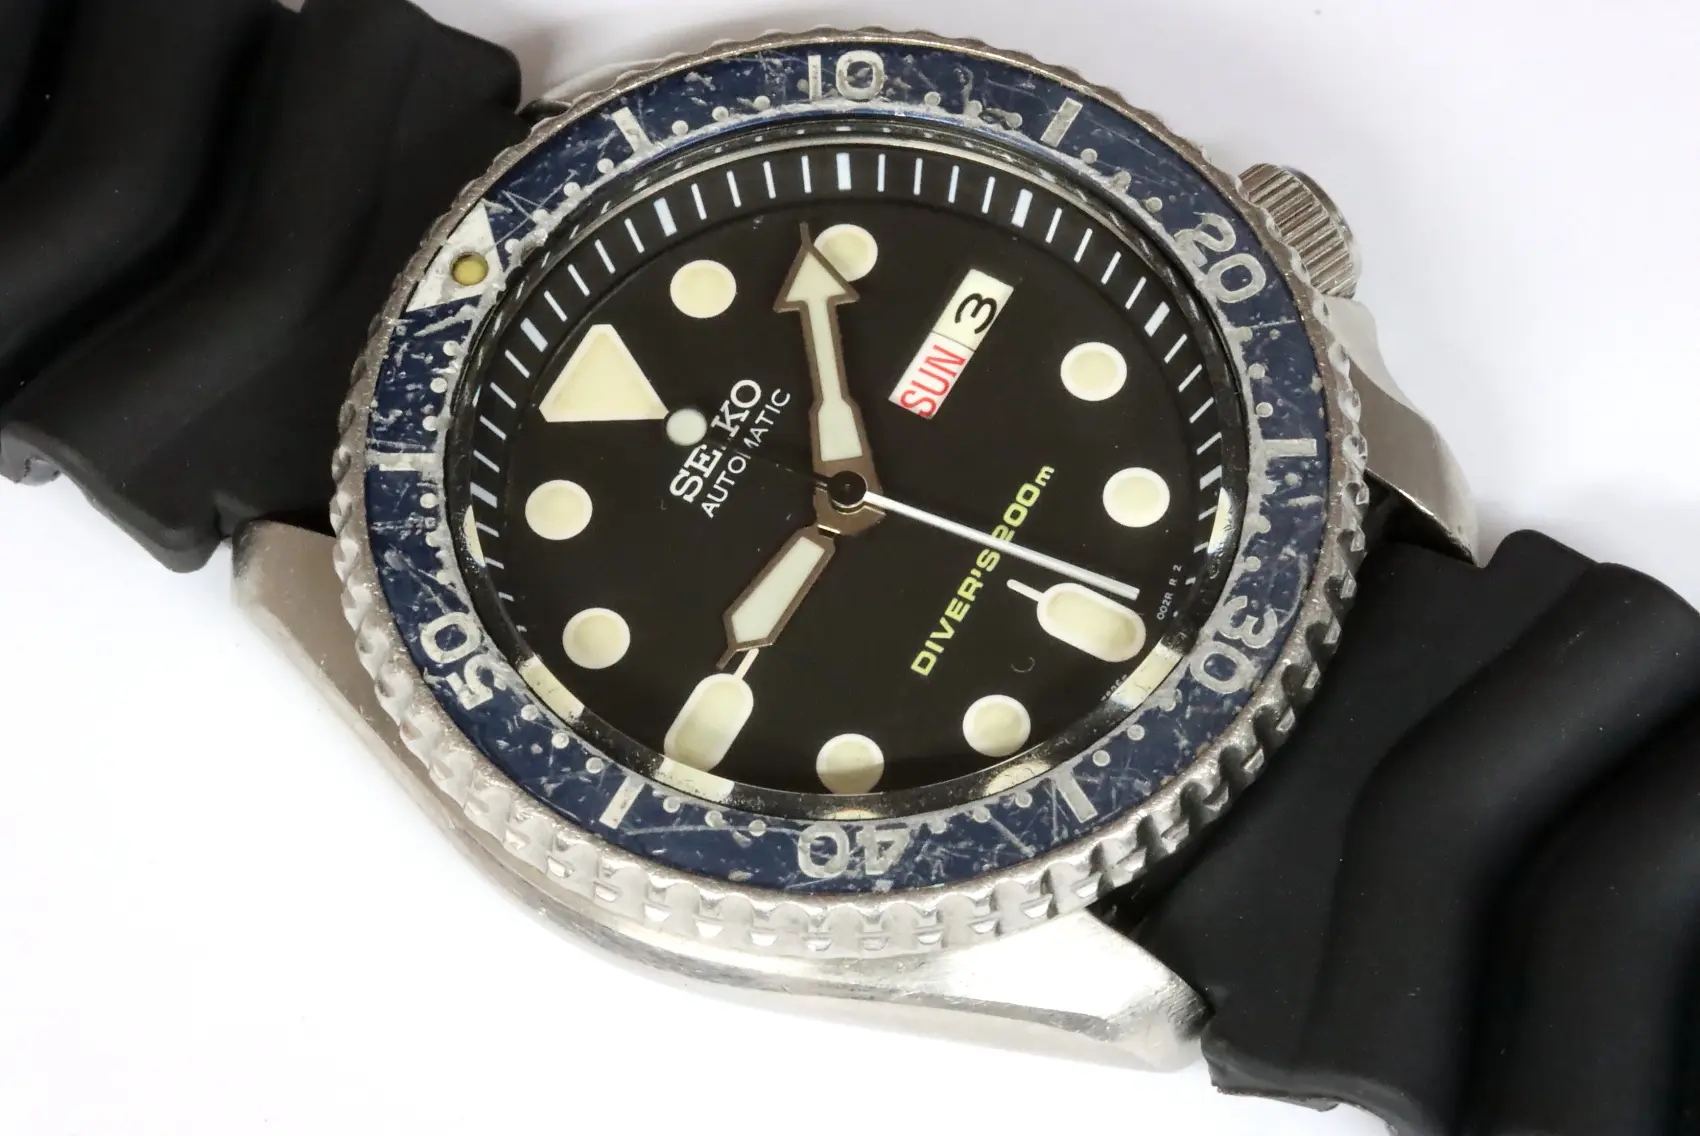 Seiko 7S26-0020 SKX007 automatic men's diver's watch 